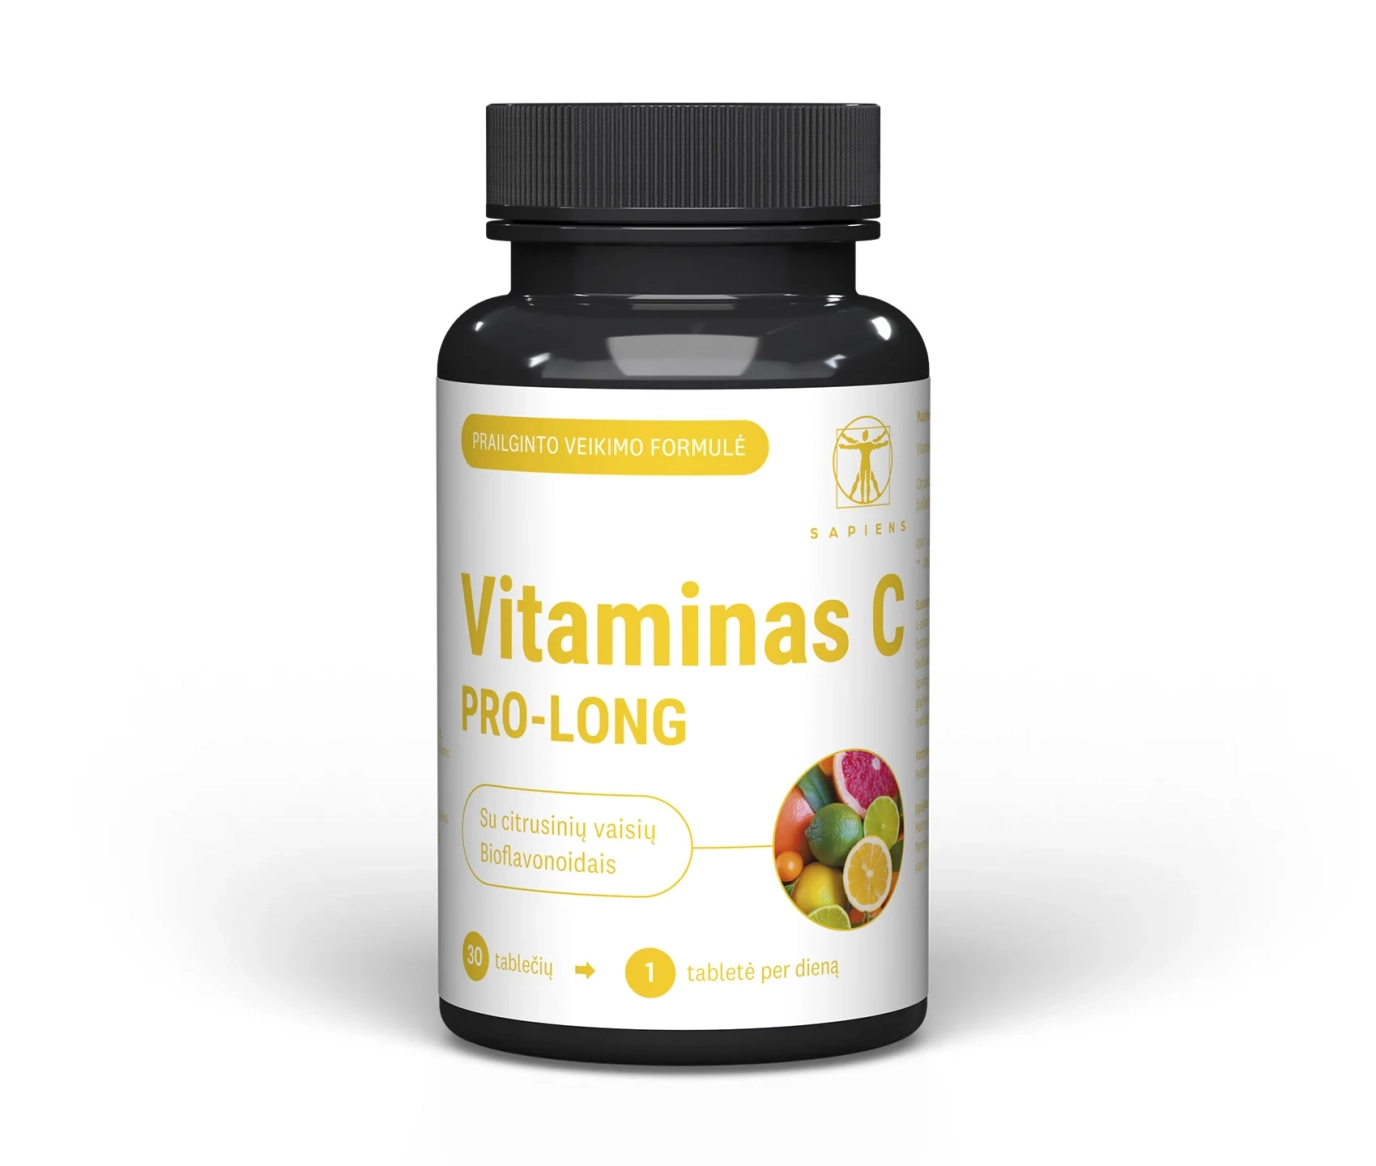 Vitaminas C PRO-LONG